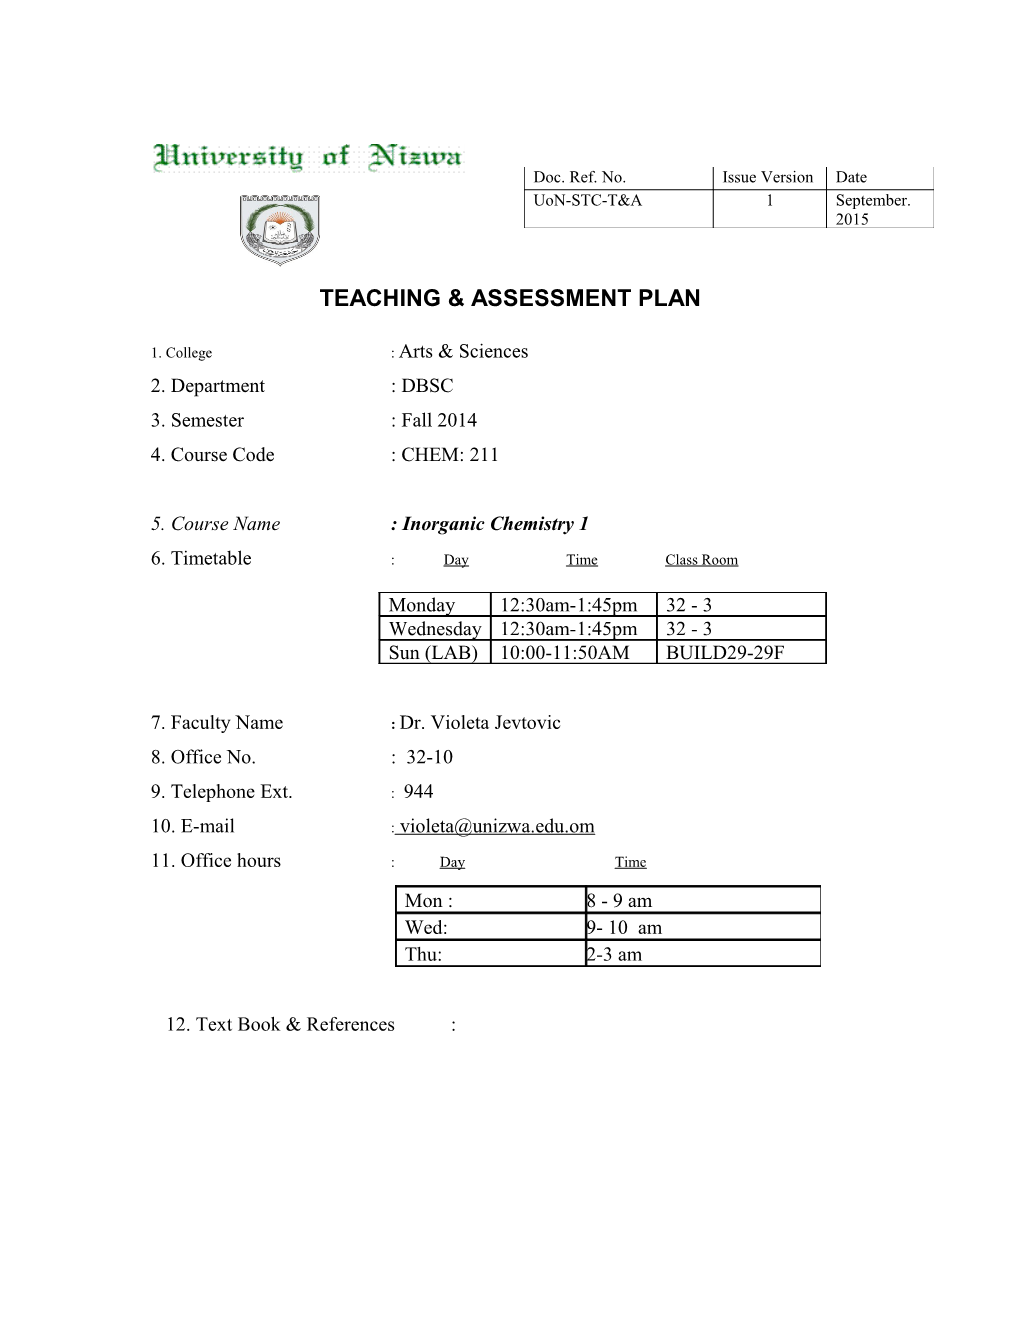 Teaching & Assessment Plan s5